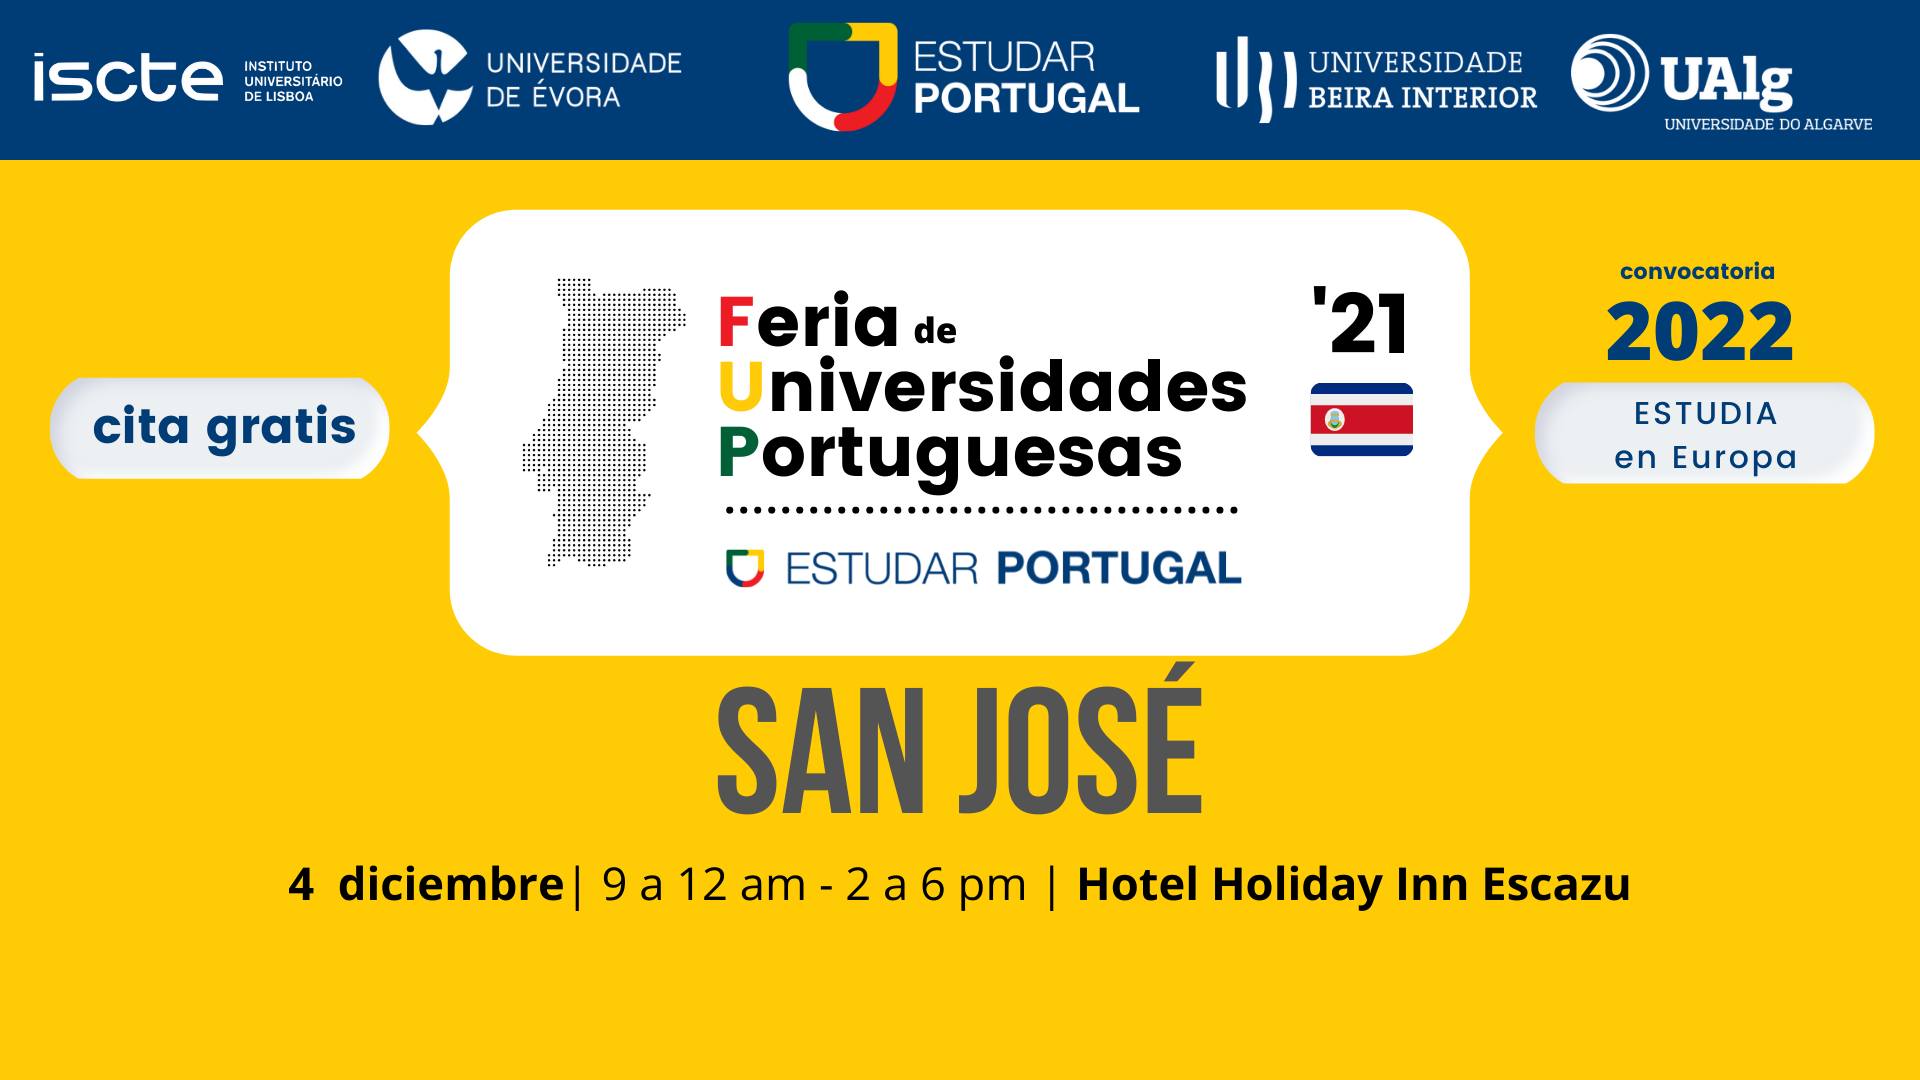 Feria de Univerisidades Portuguesas - FUP'21 SAN JOSÉ